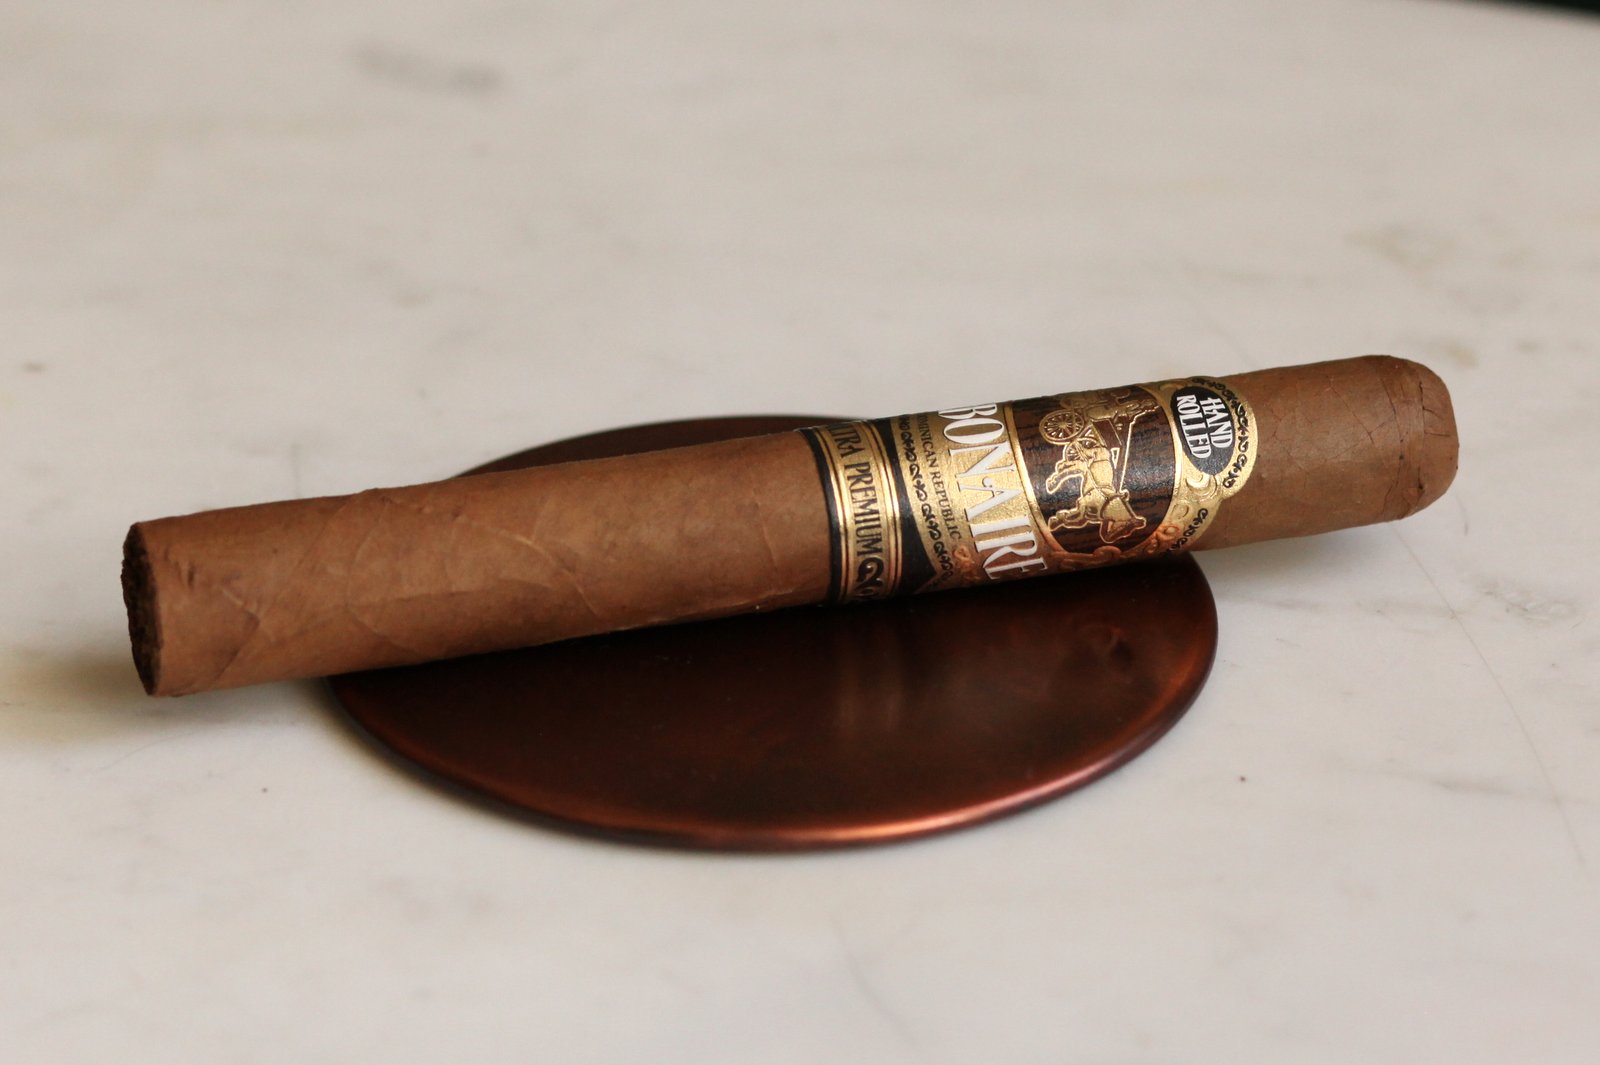 Debonaire Daybreak Toro Cigar Review